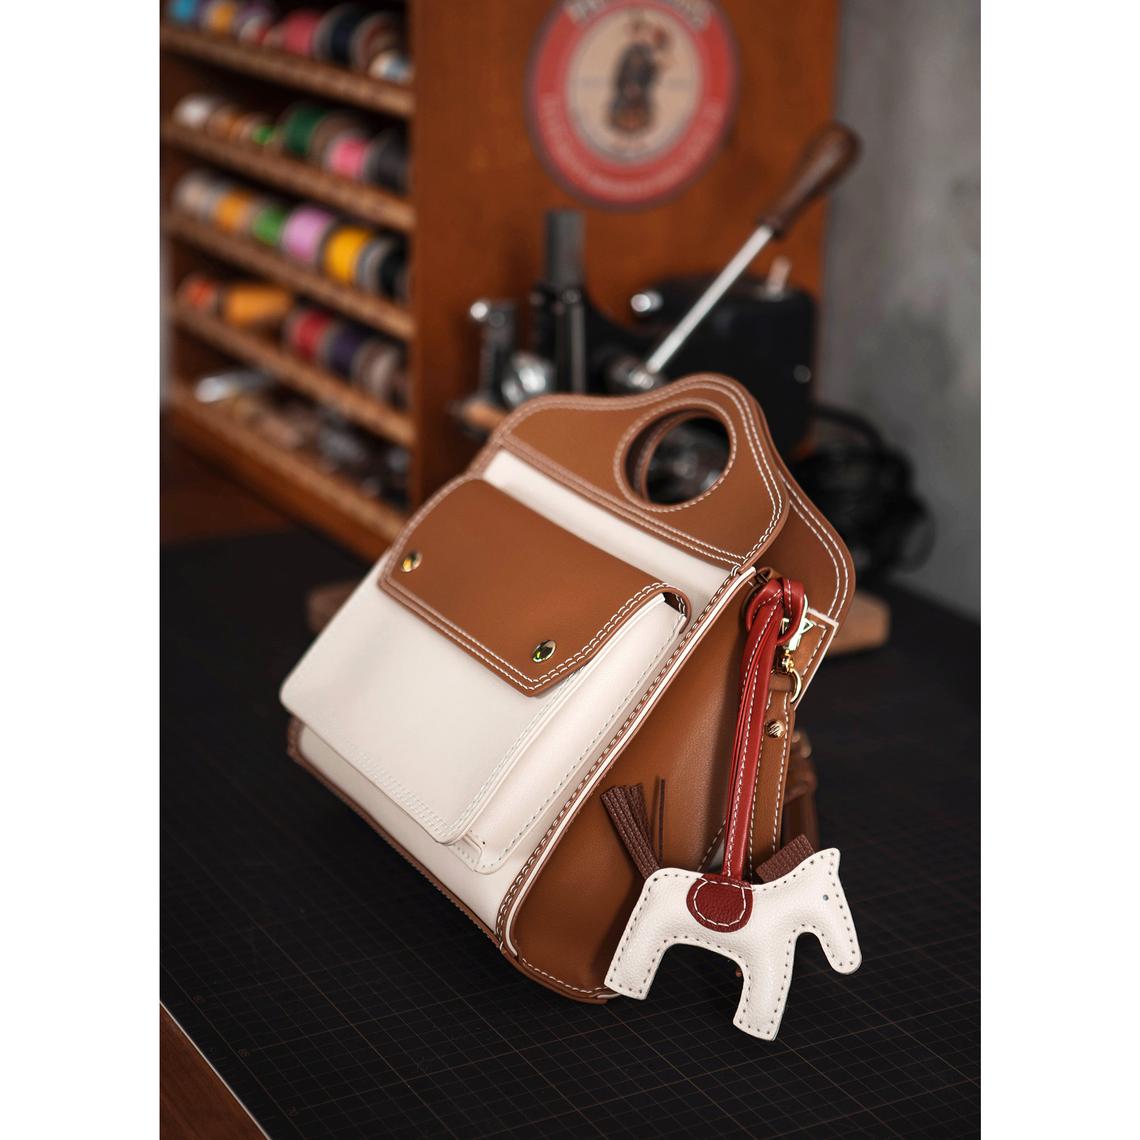 Steps on how to make a handbag | Crossbody Bag | DIY Kit | POPSEWING™ 